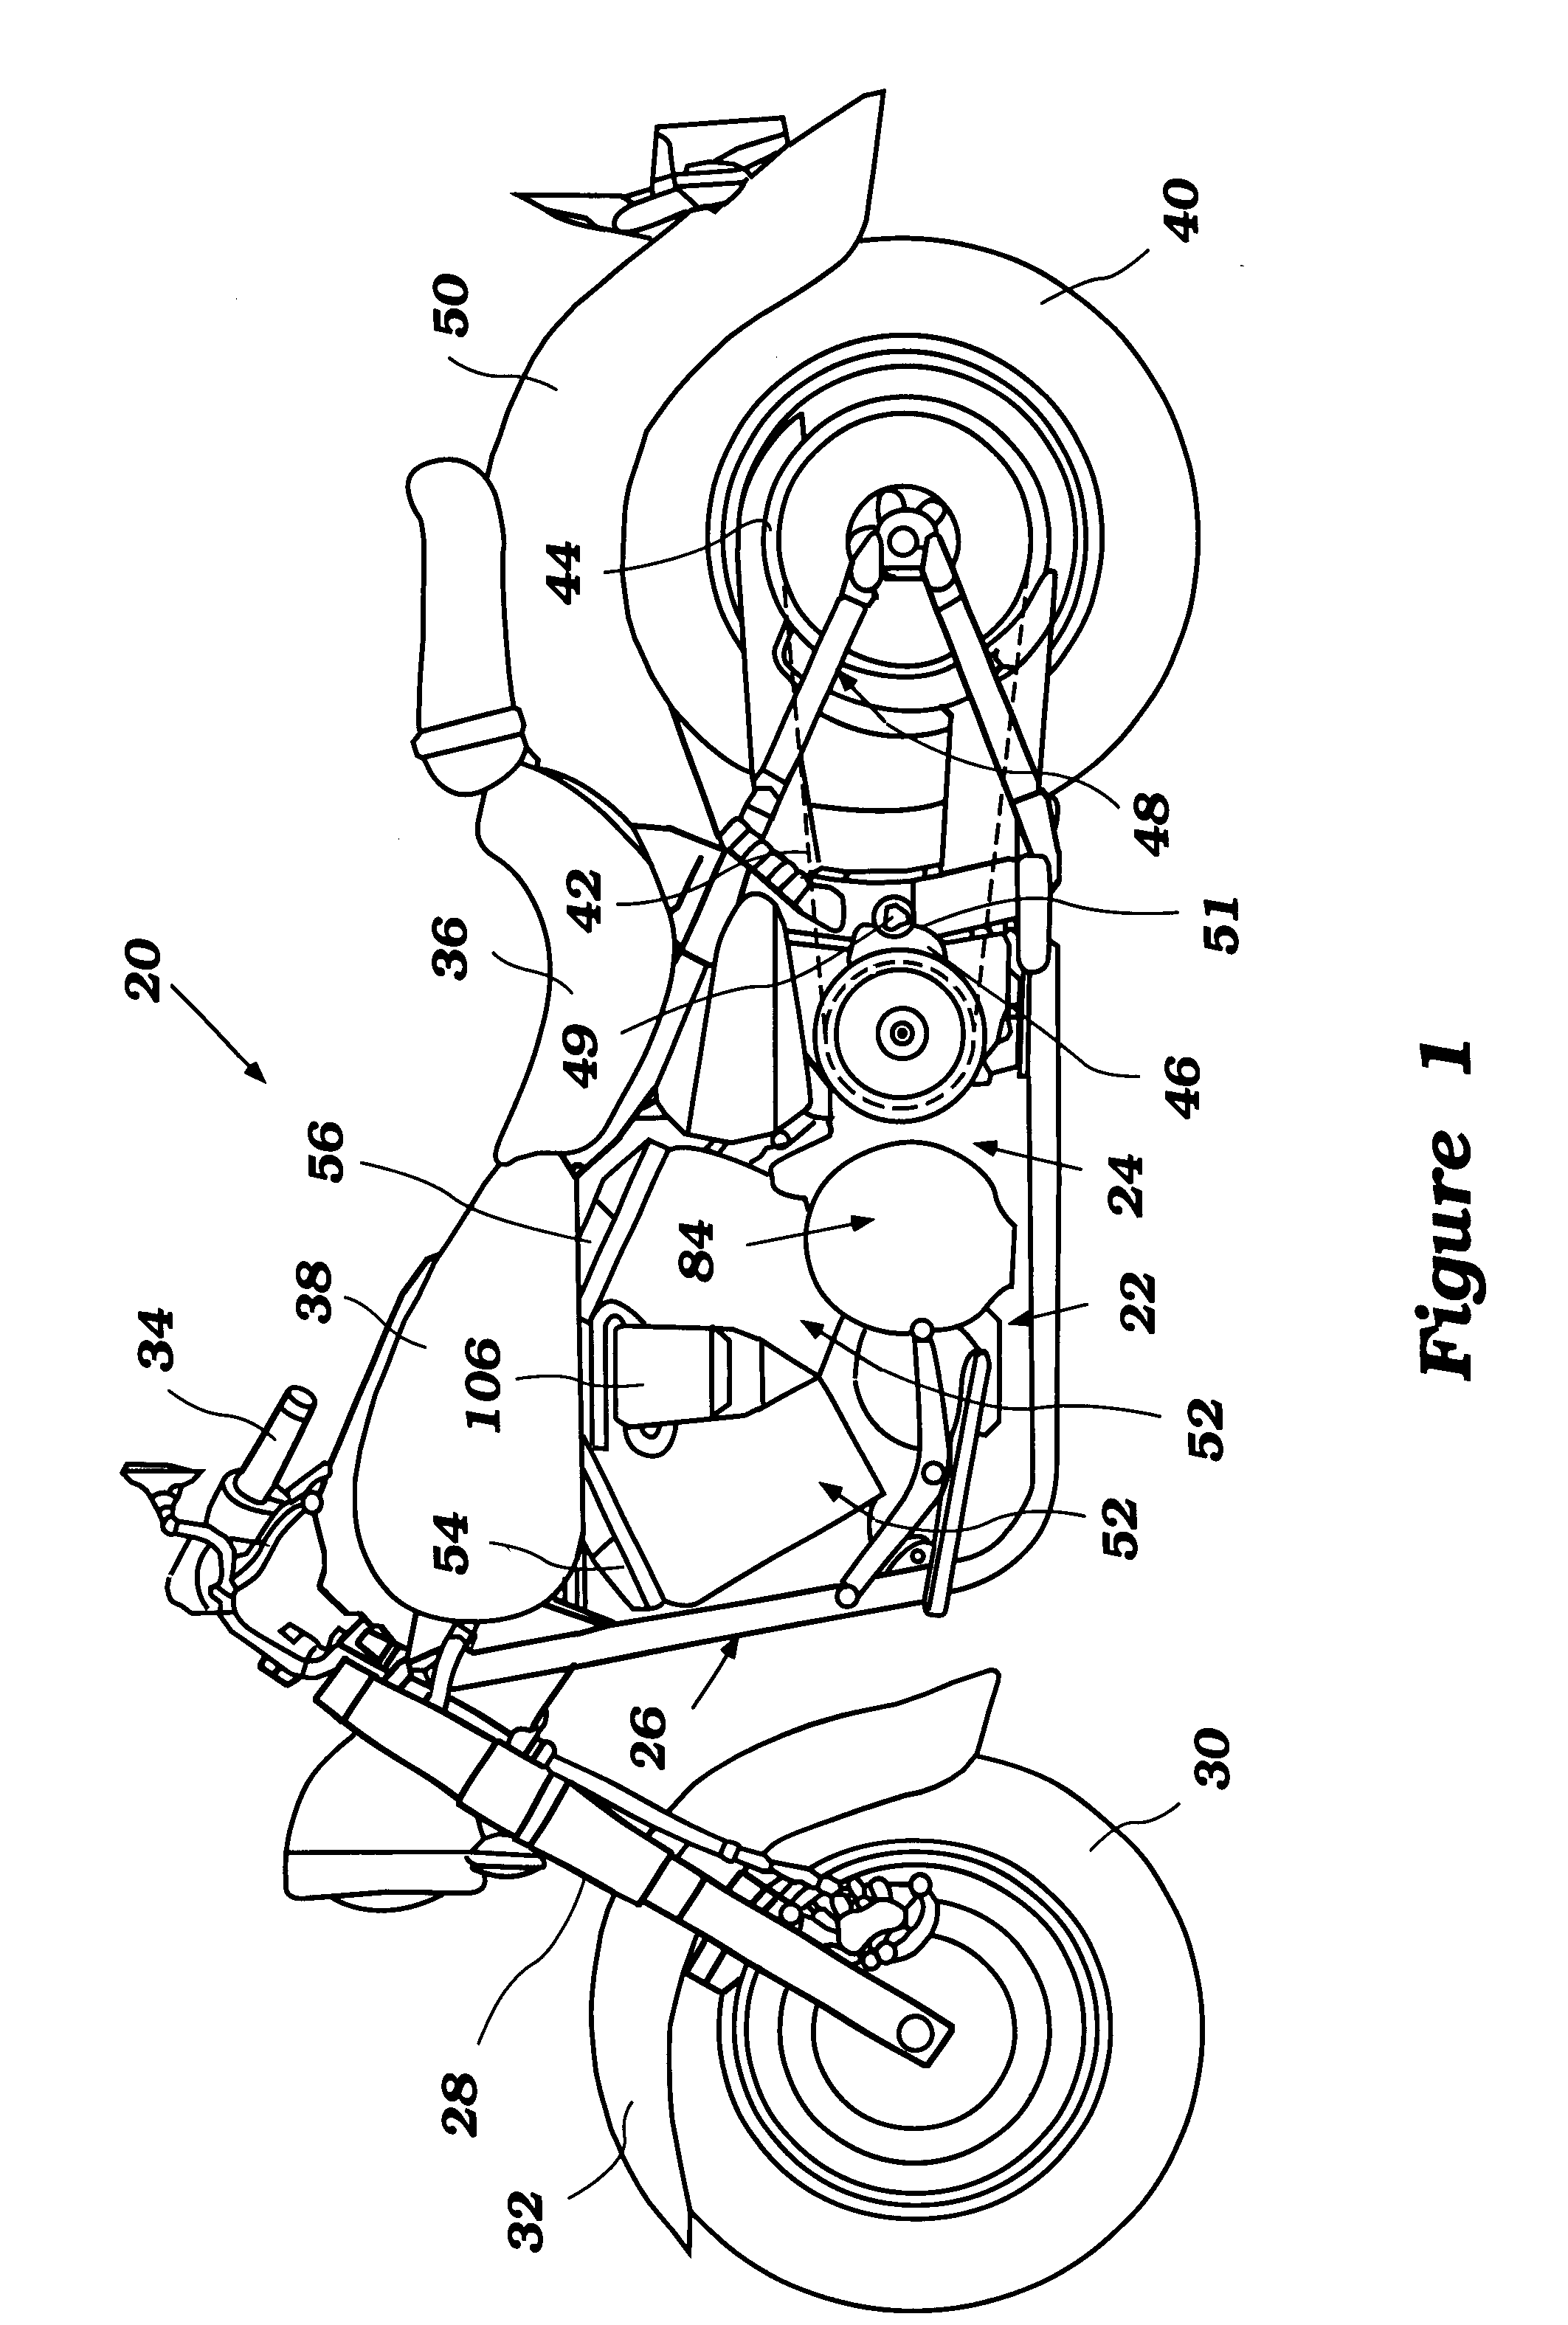 Motorcycle transmission